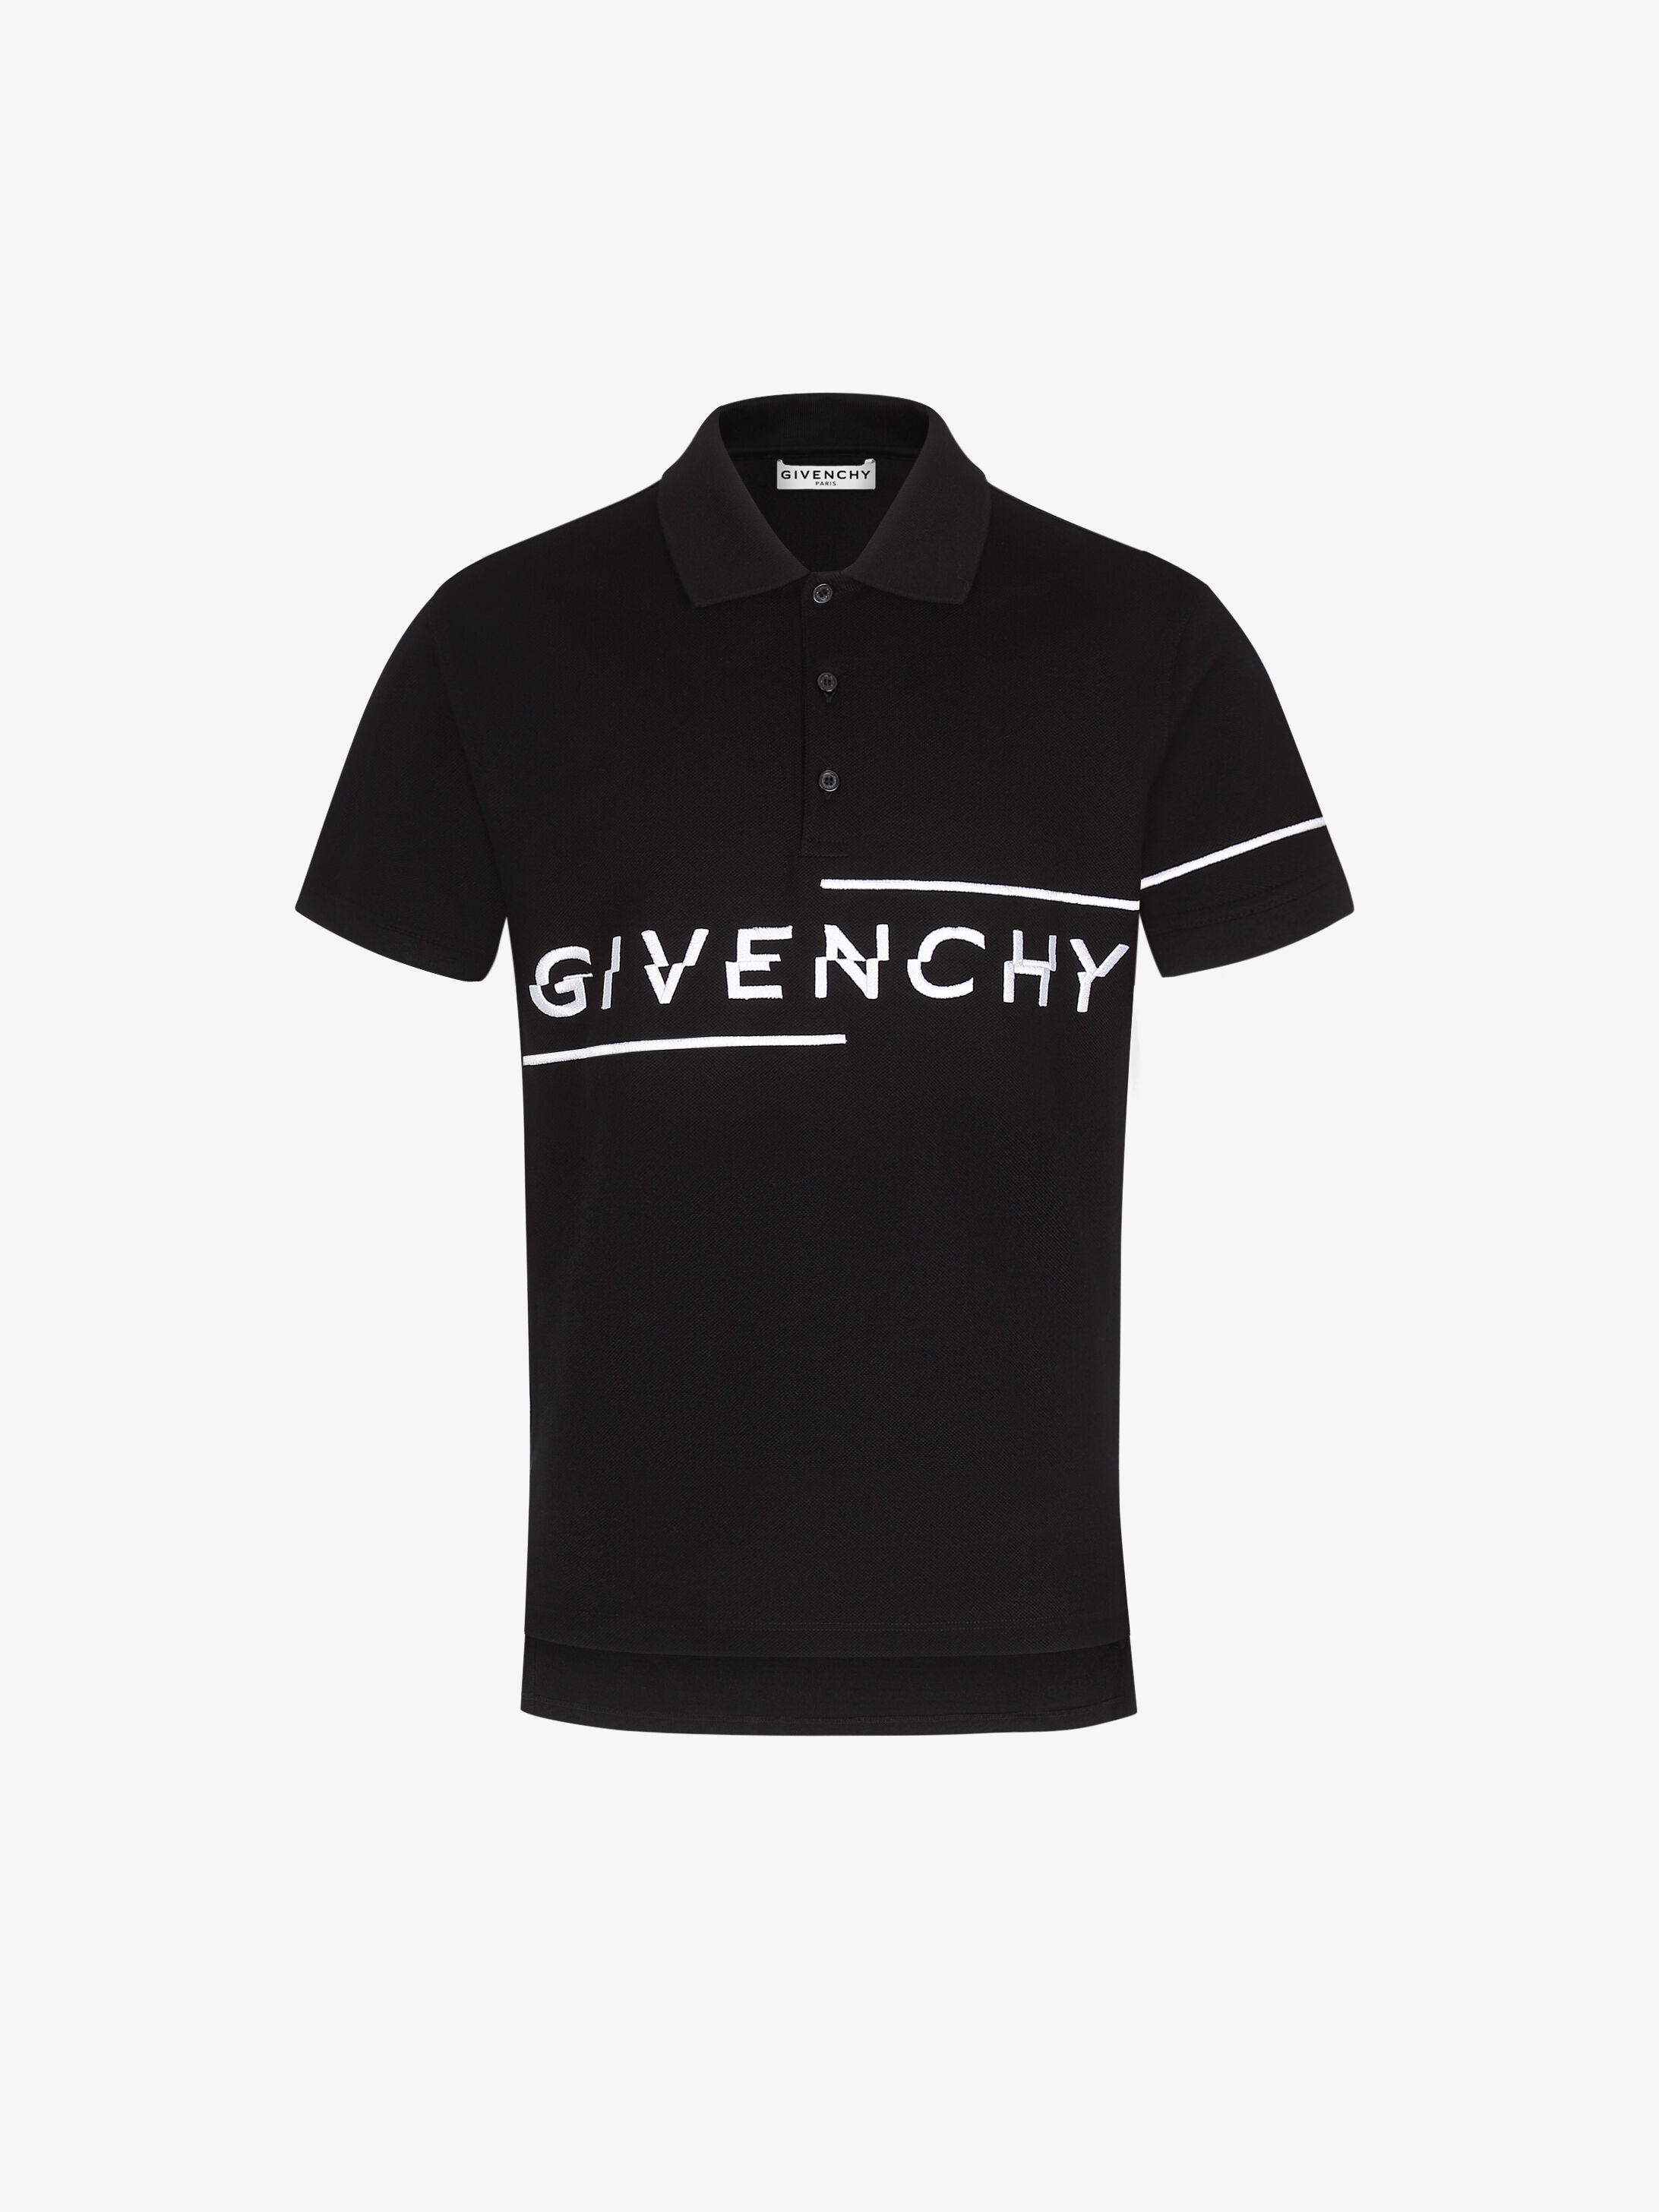 Givenchy Clothing Size Chart